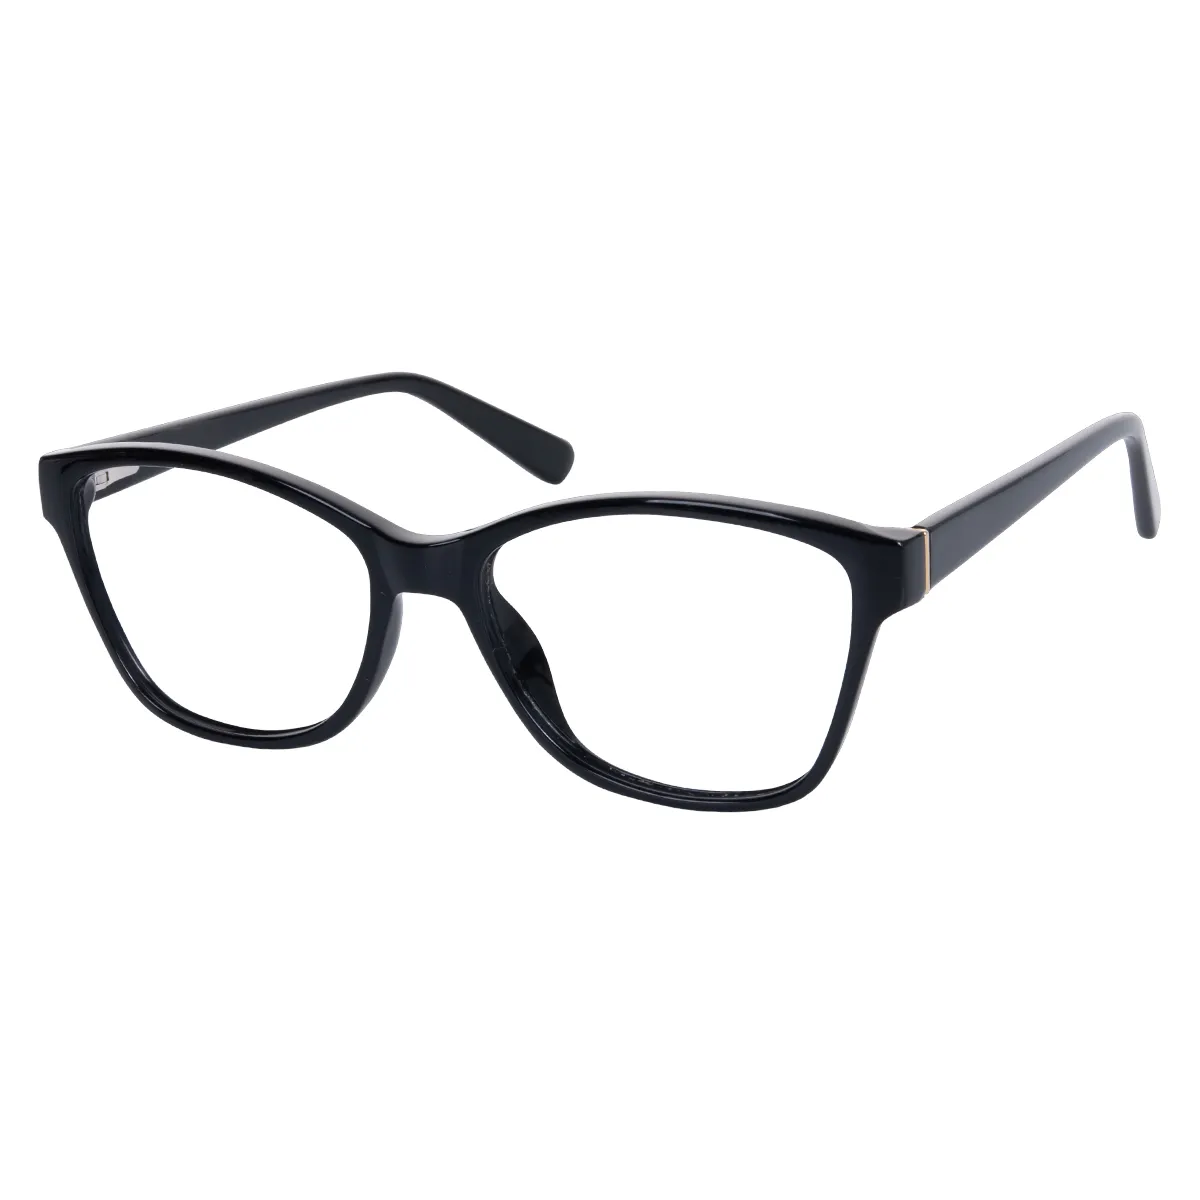 Nalon - Square Black Glasses for Women